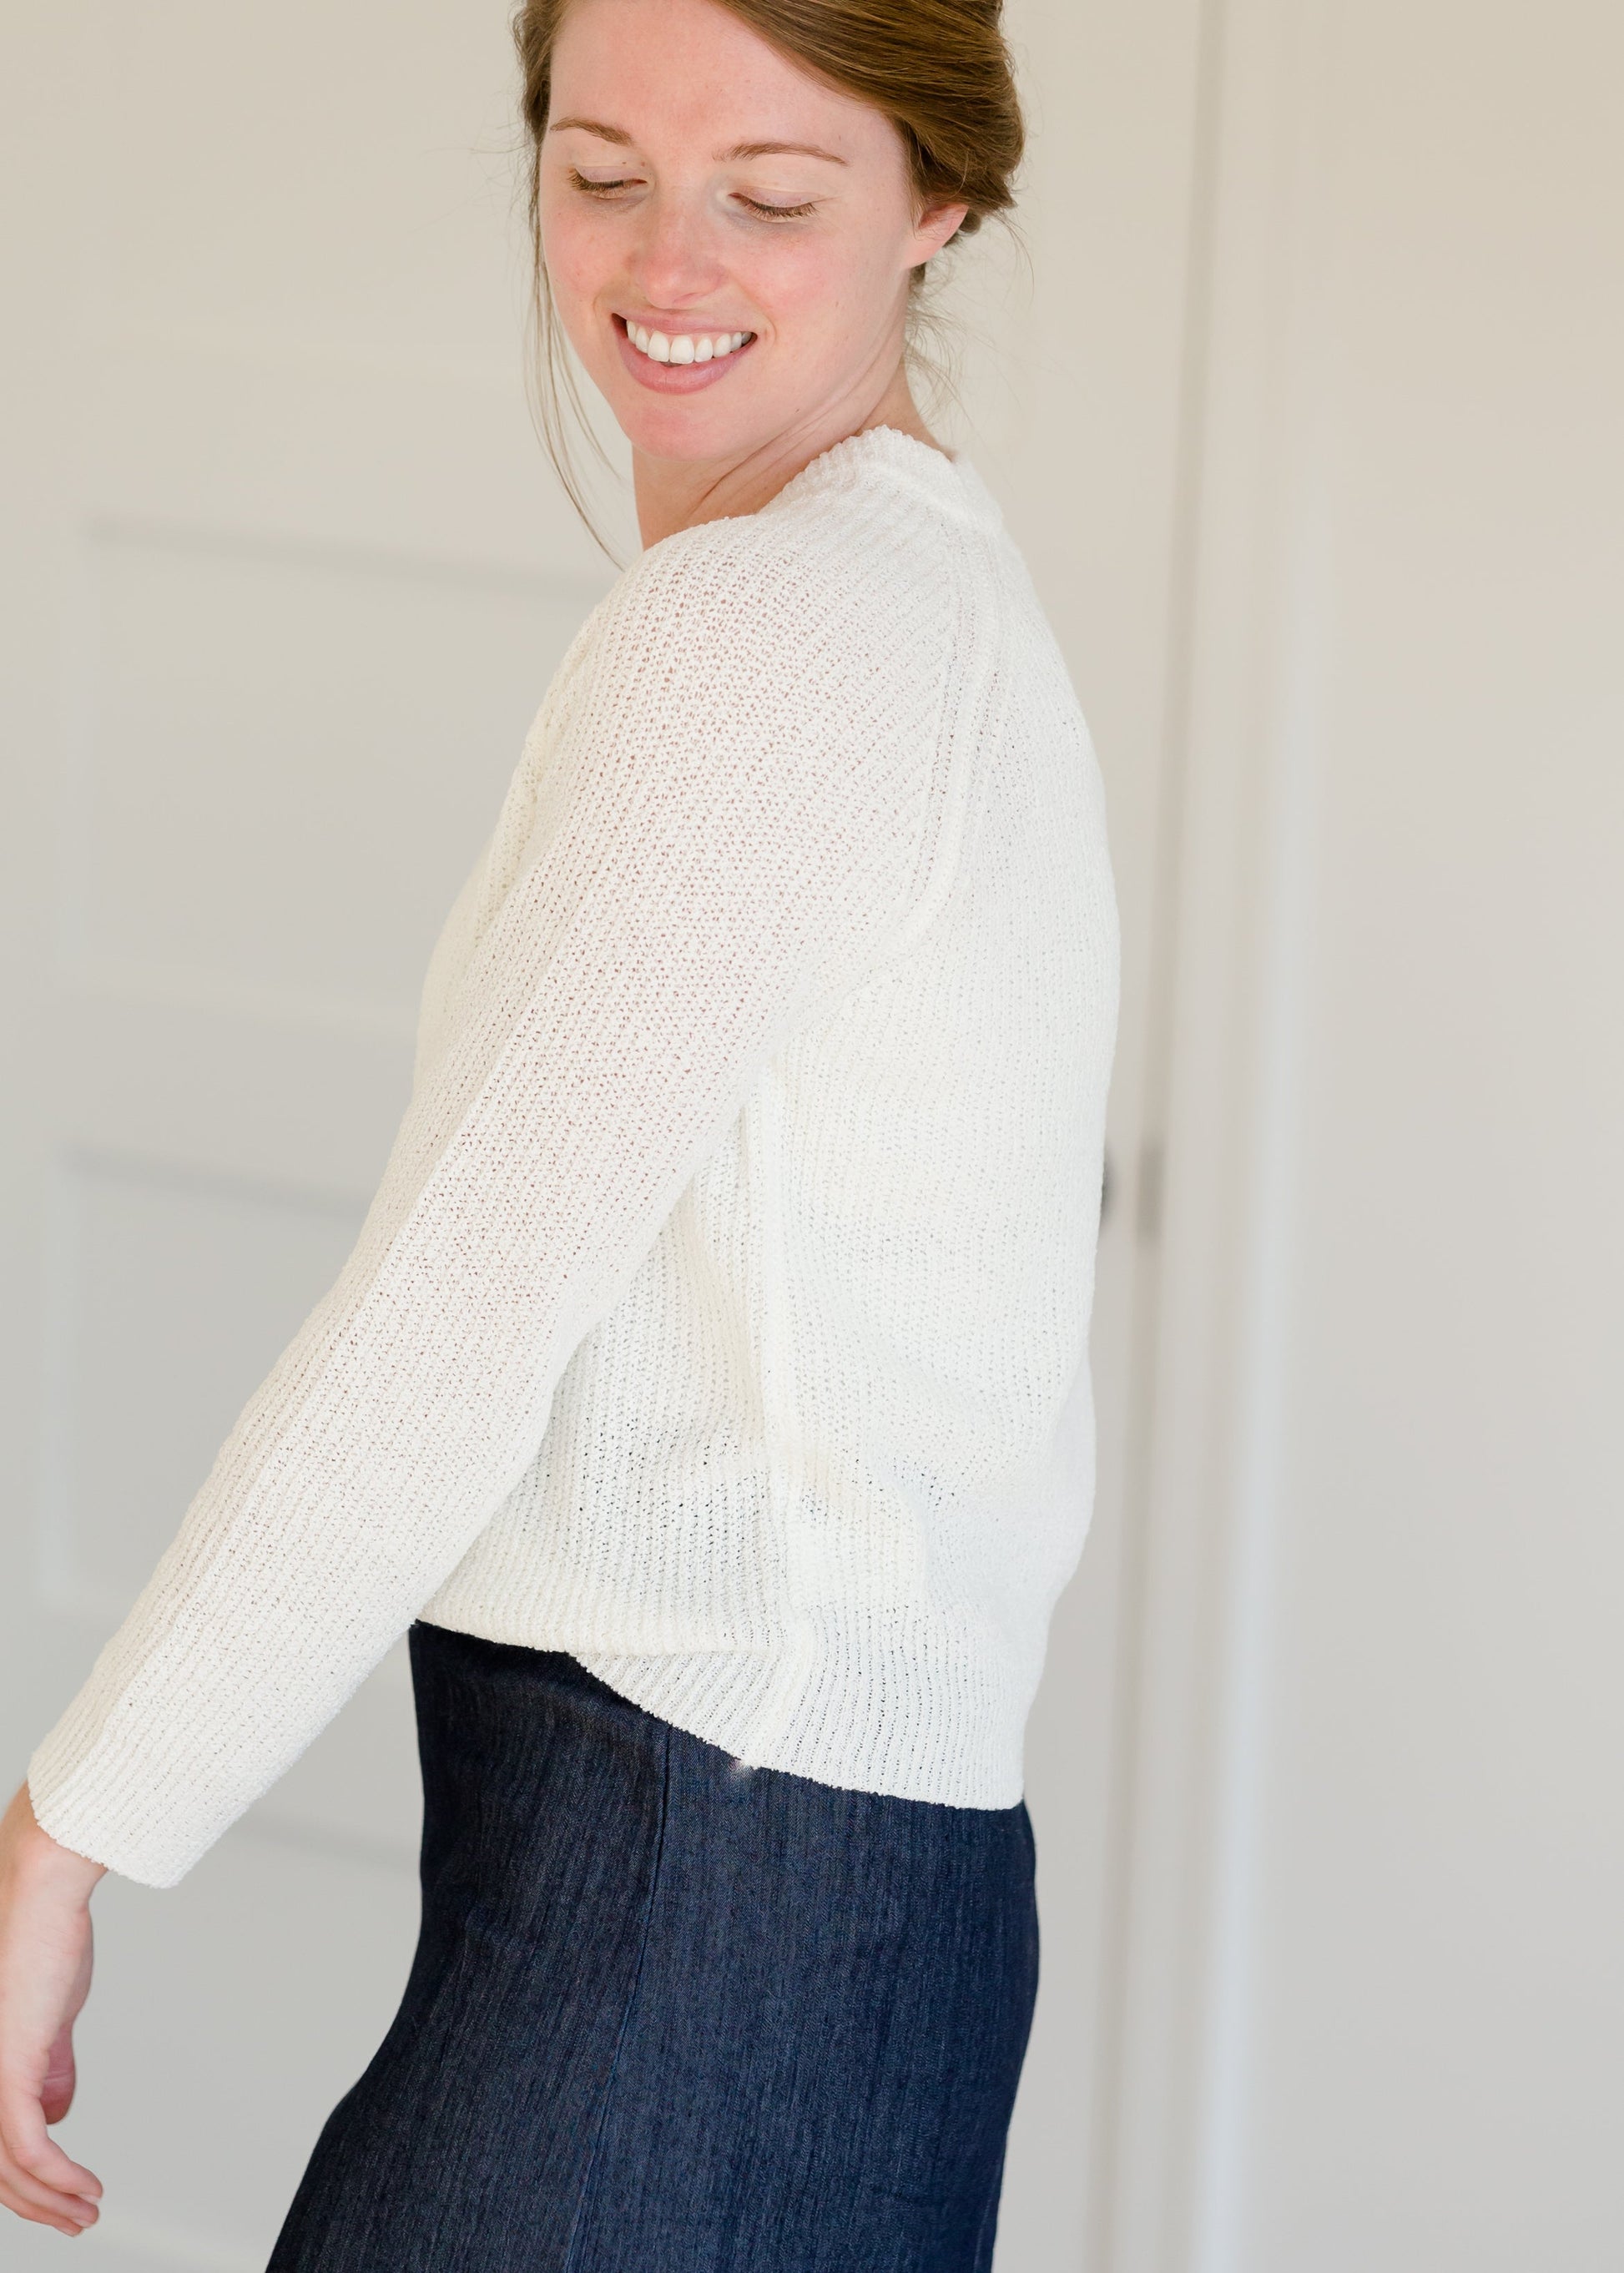 Sheer Knit Crewneck Sweater - FINAL SALE Tops